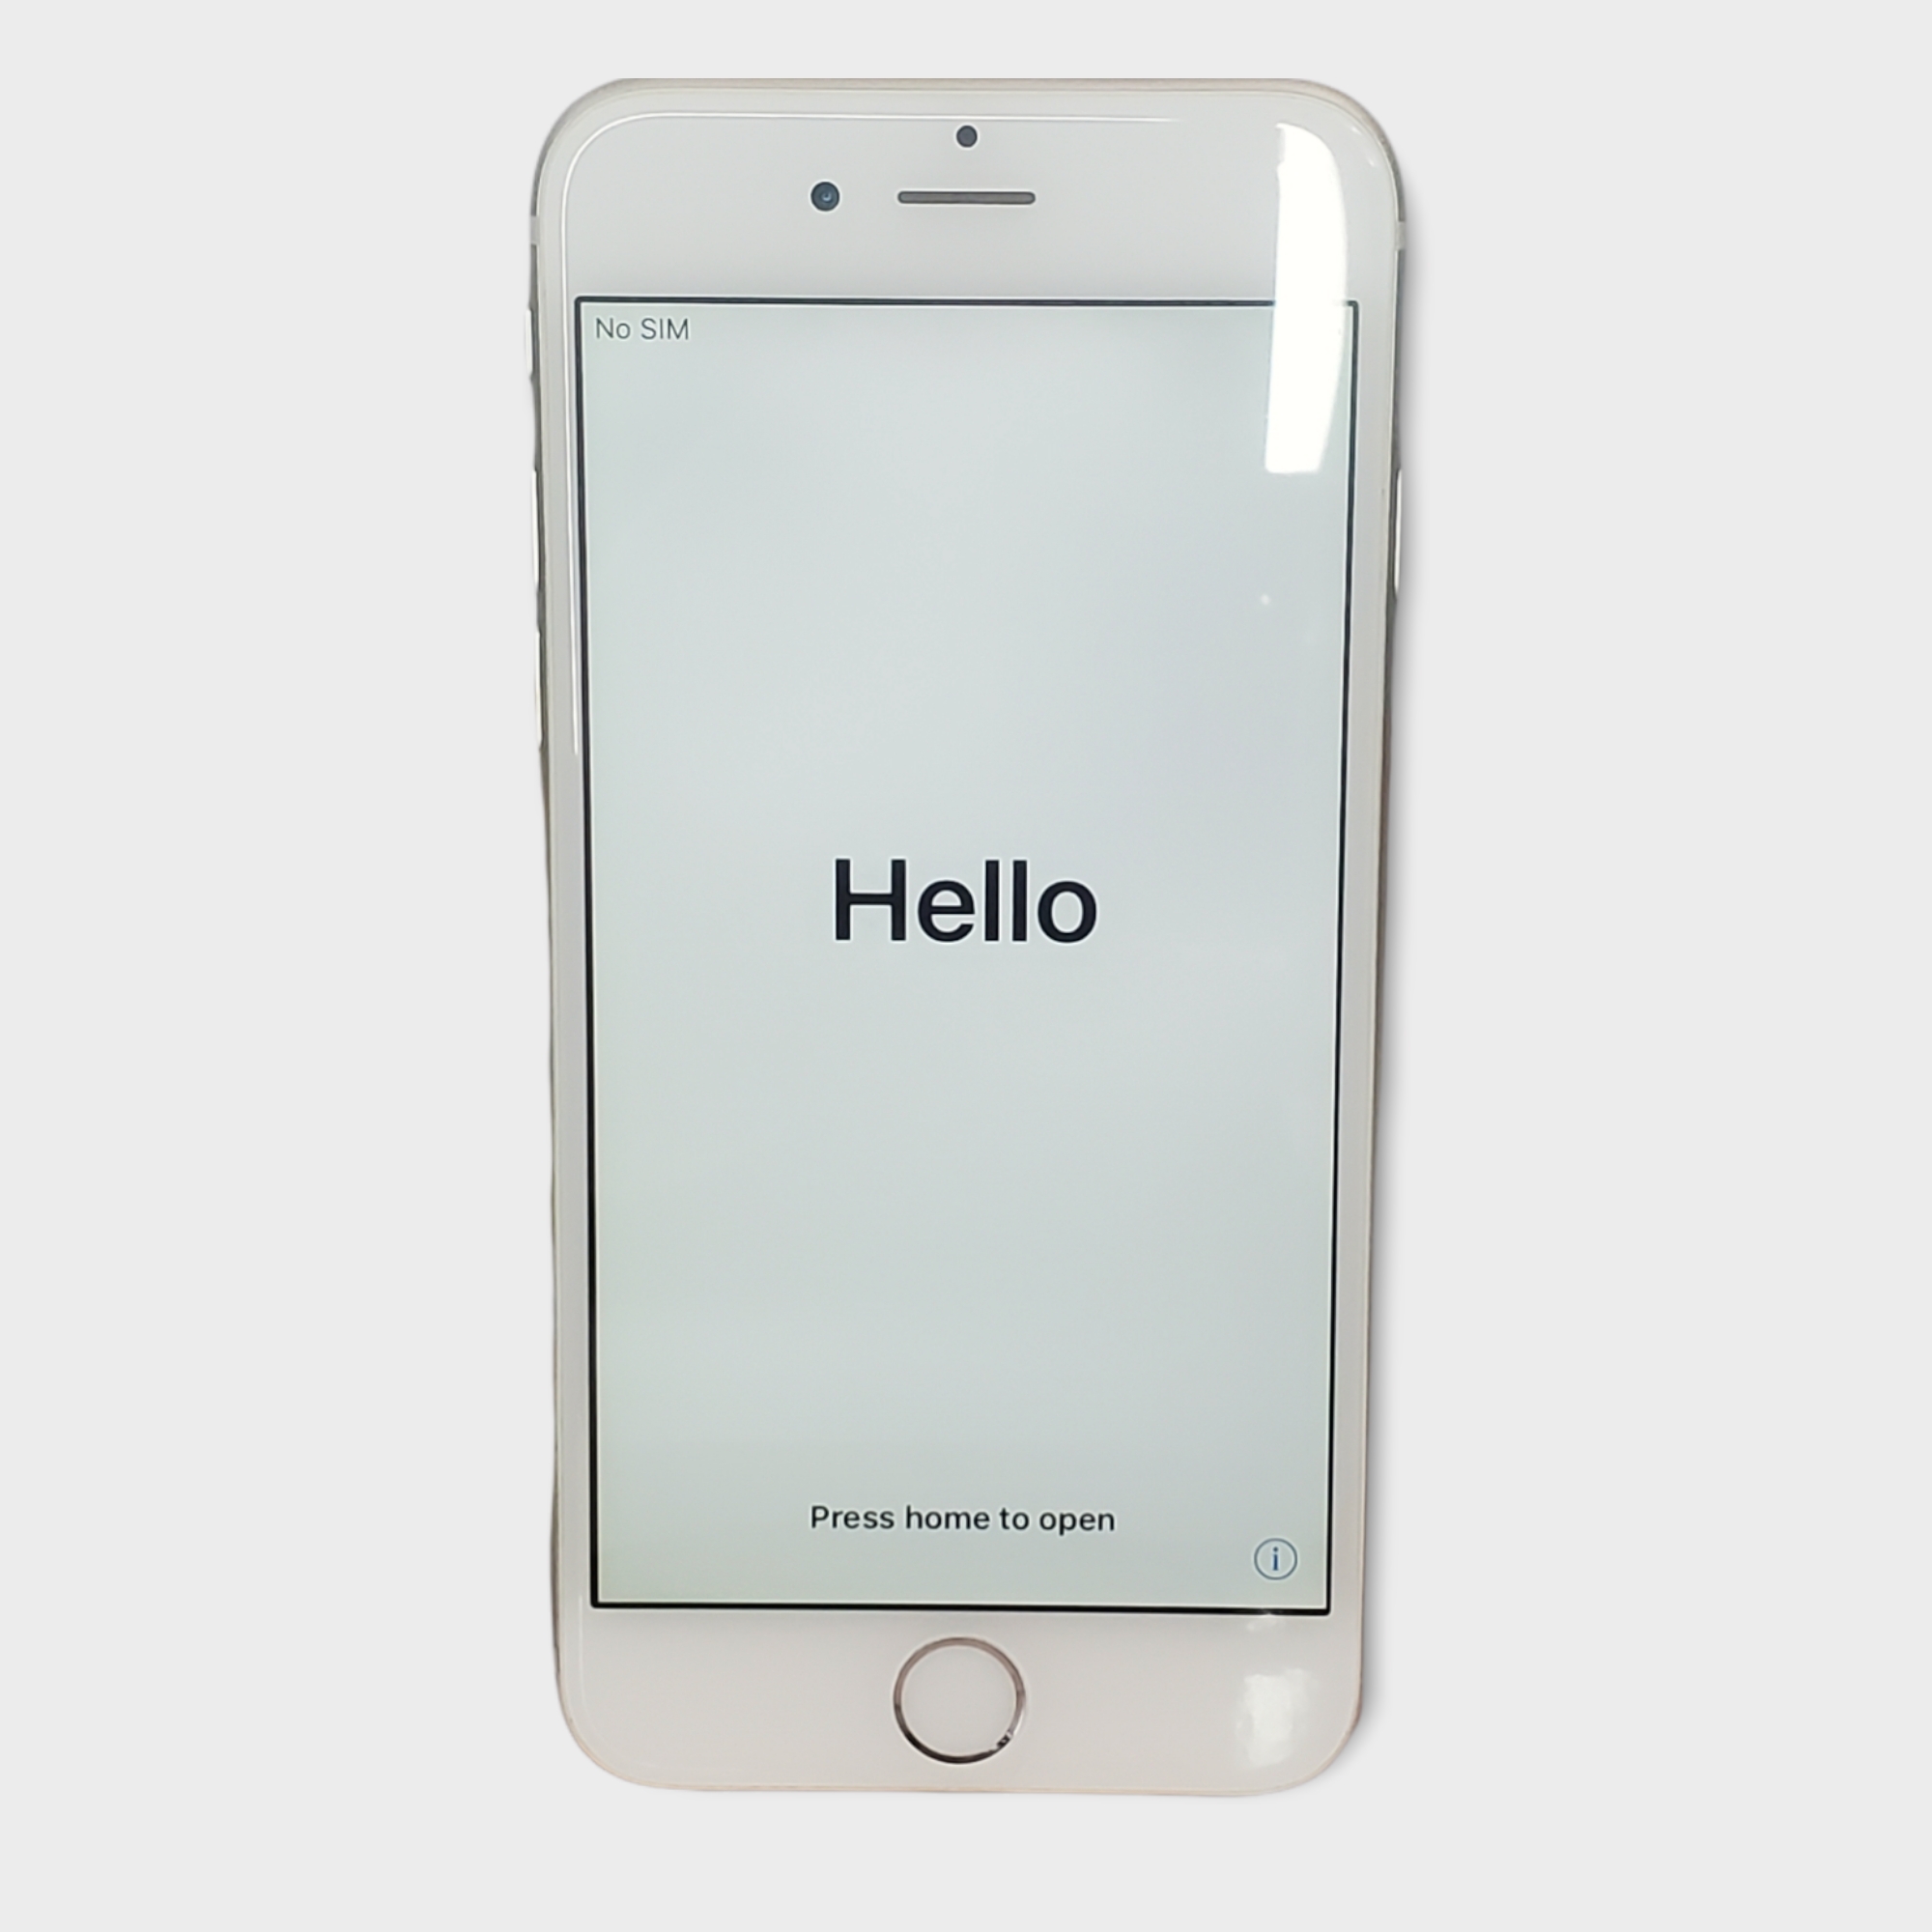 Apple iPhone 6s 32GB Silver A1688 MN1M2LL/A (Verizon) (CDMA+GSM)